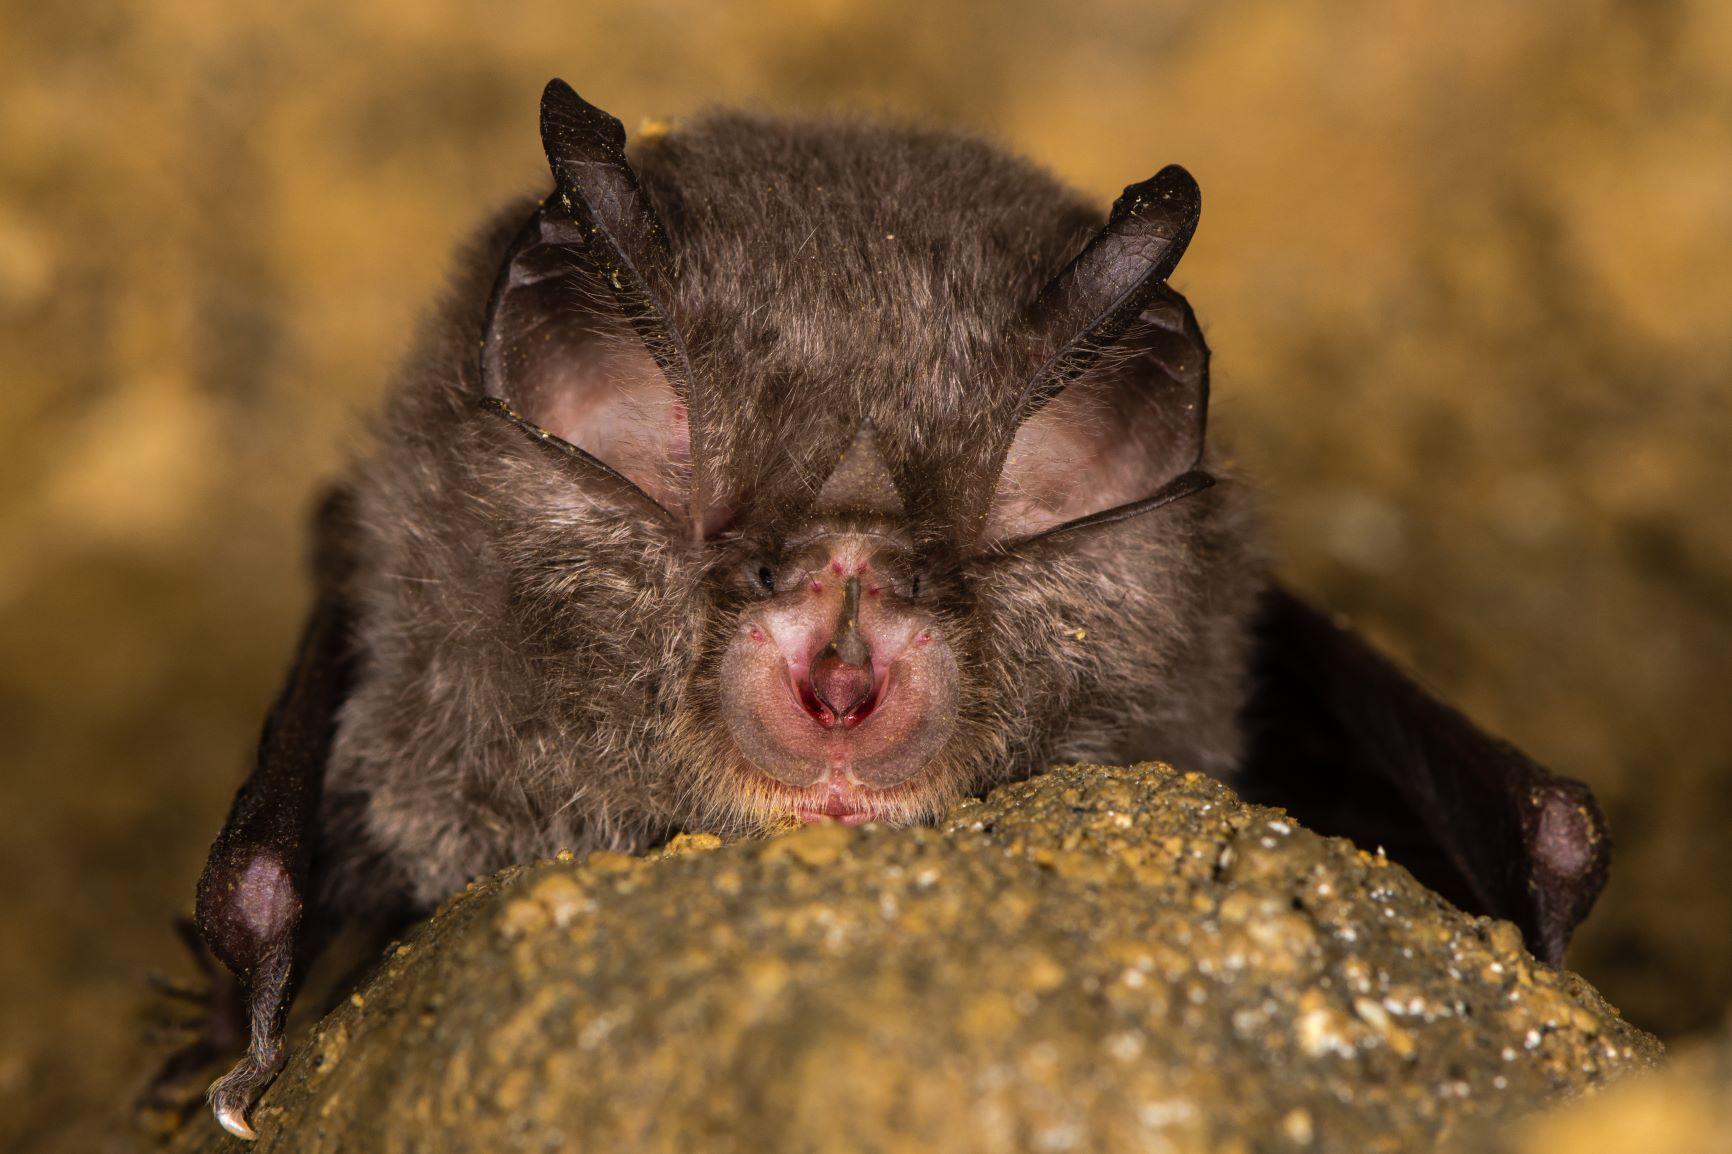 Close up of a Lesser Horseshoe Bat's face